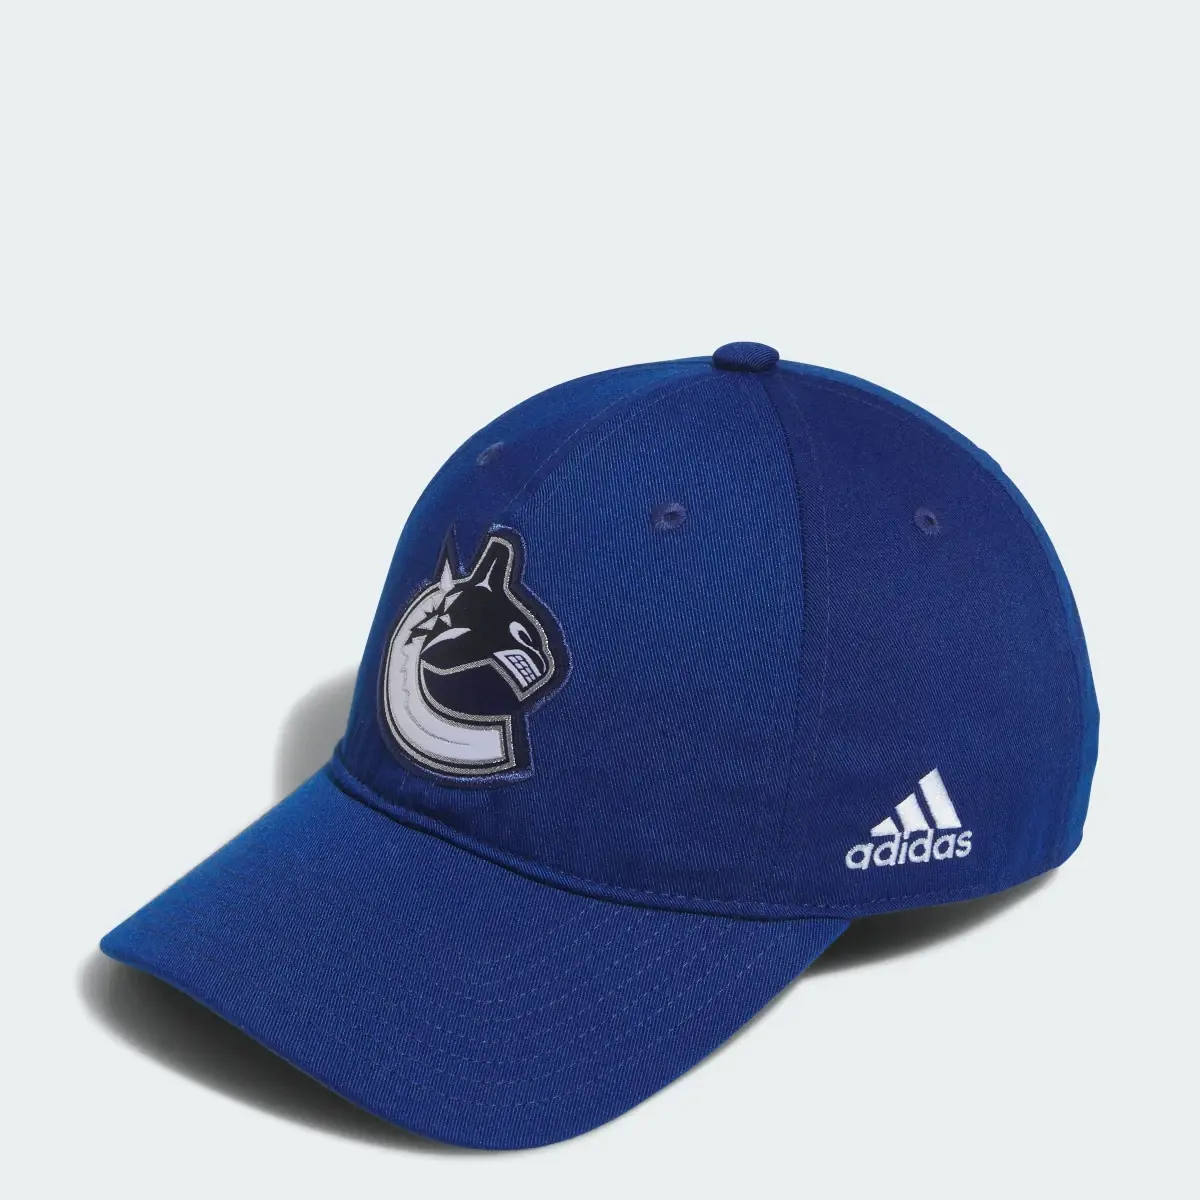 Adidas Canucks Slouch Adjustable Hat. 1